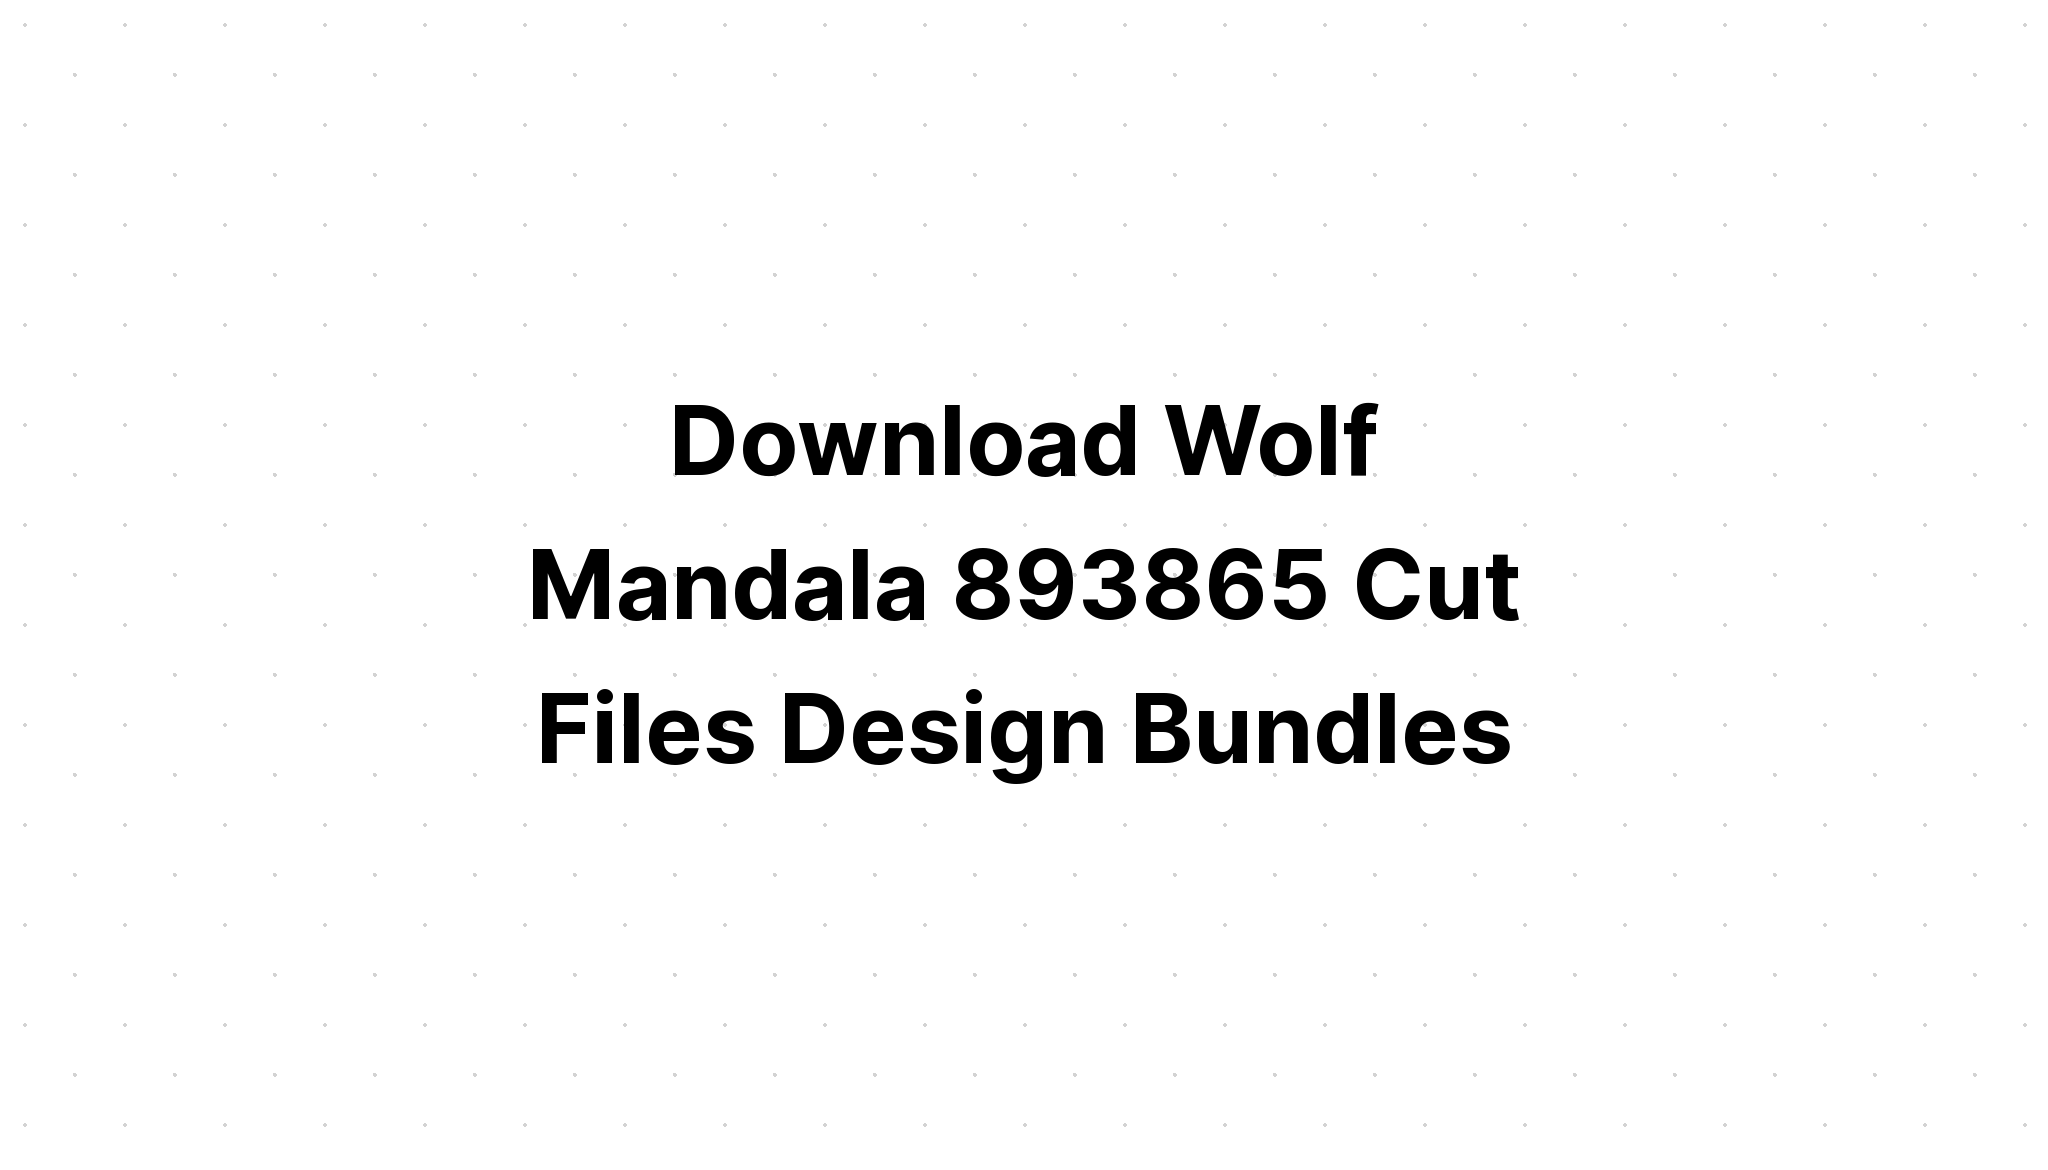 Download Layered Mandala Tiger Svg - Free SVG Cut File